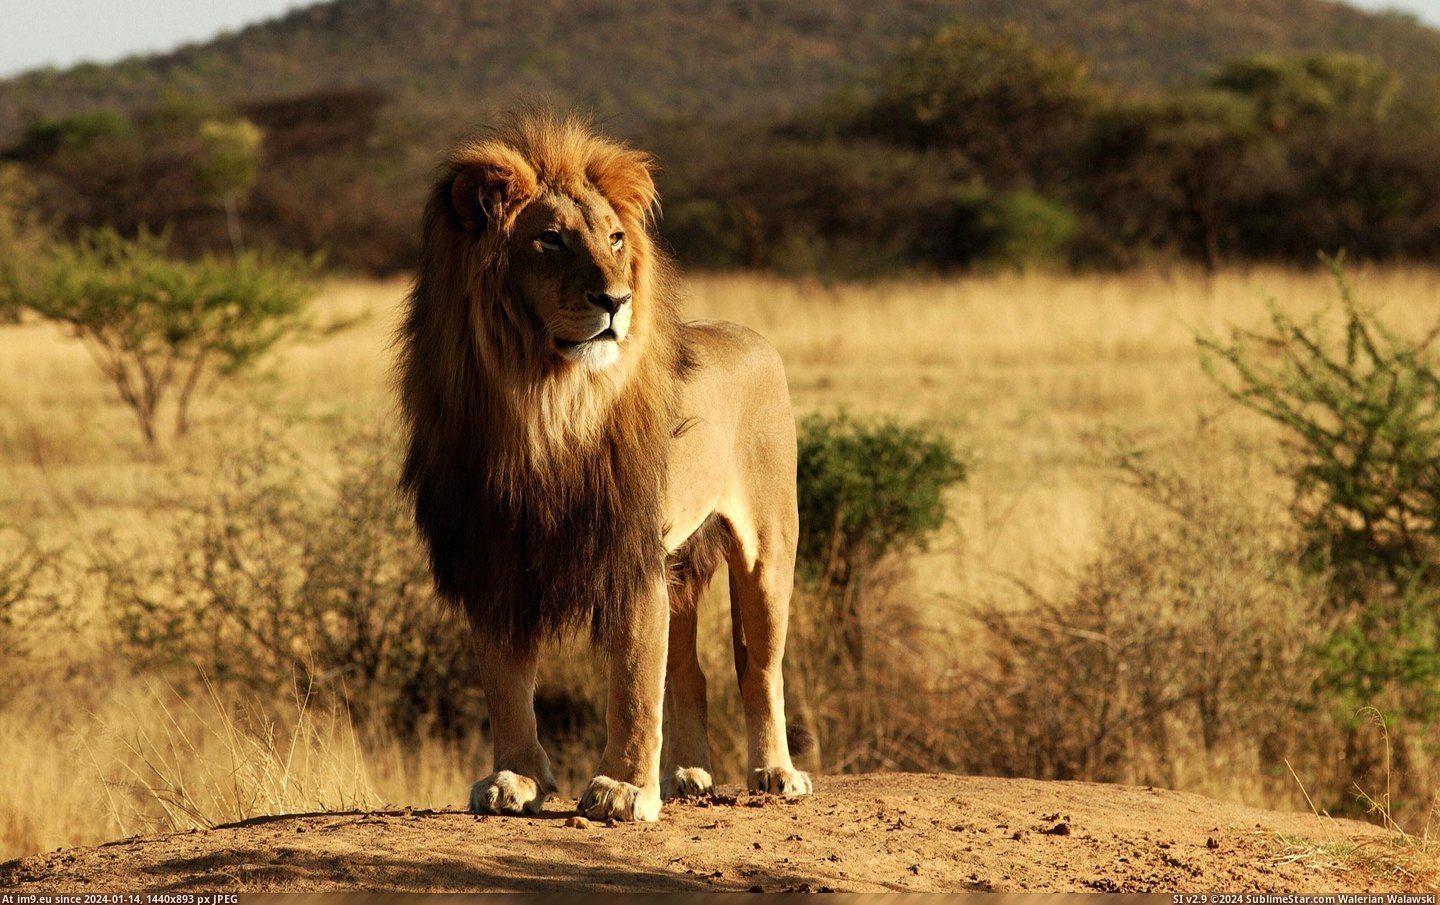 #Wallpaper #Beautiful #Lion #Wide #King King Lion Wide HD Wallpaper Pic. (Obraz z album Unique HD Wallpapers))